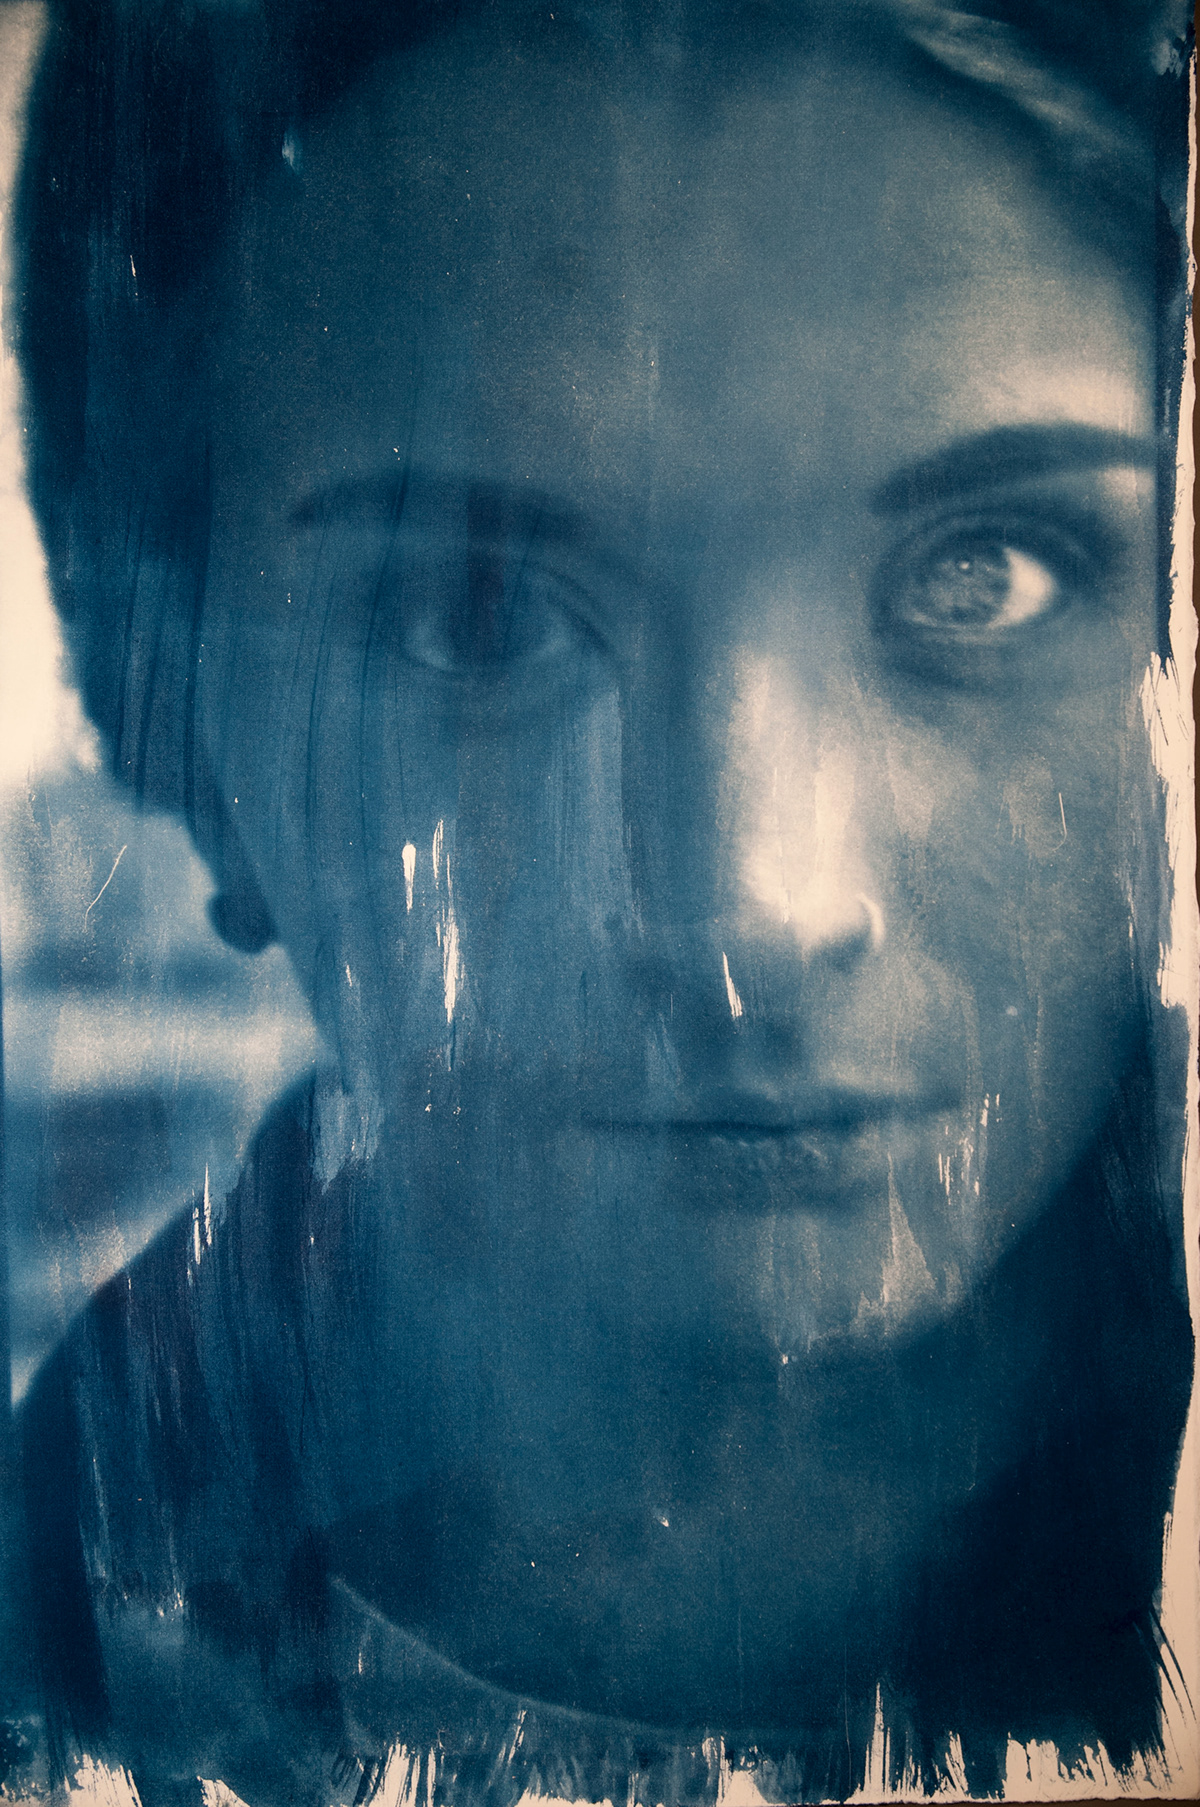 cyanotype Van Dyke digital negatives